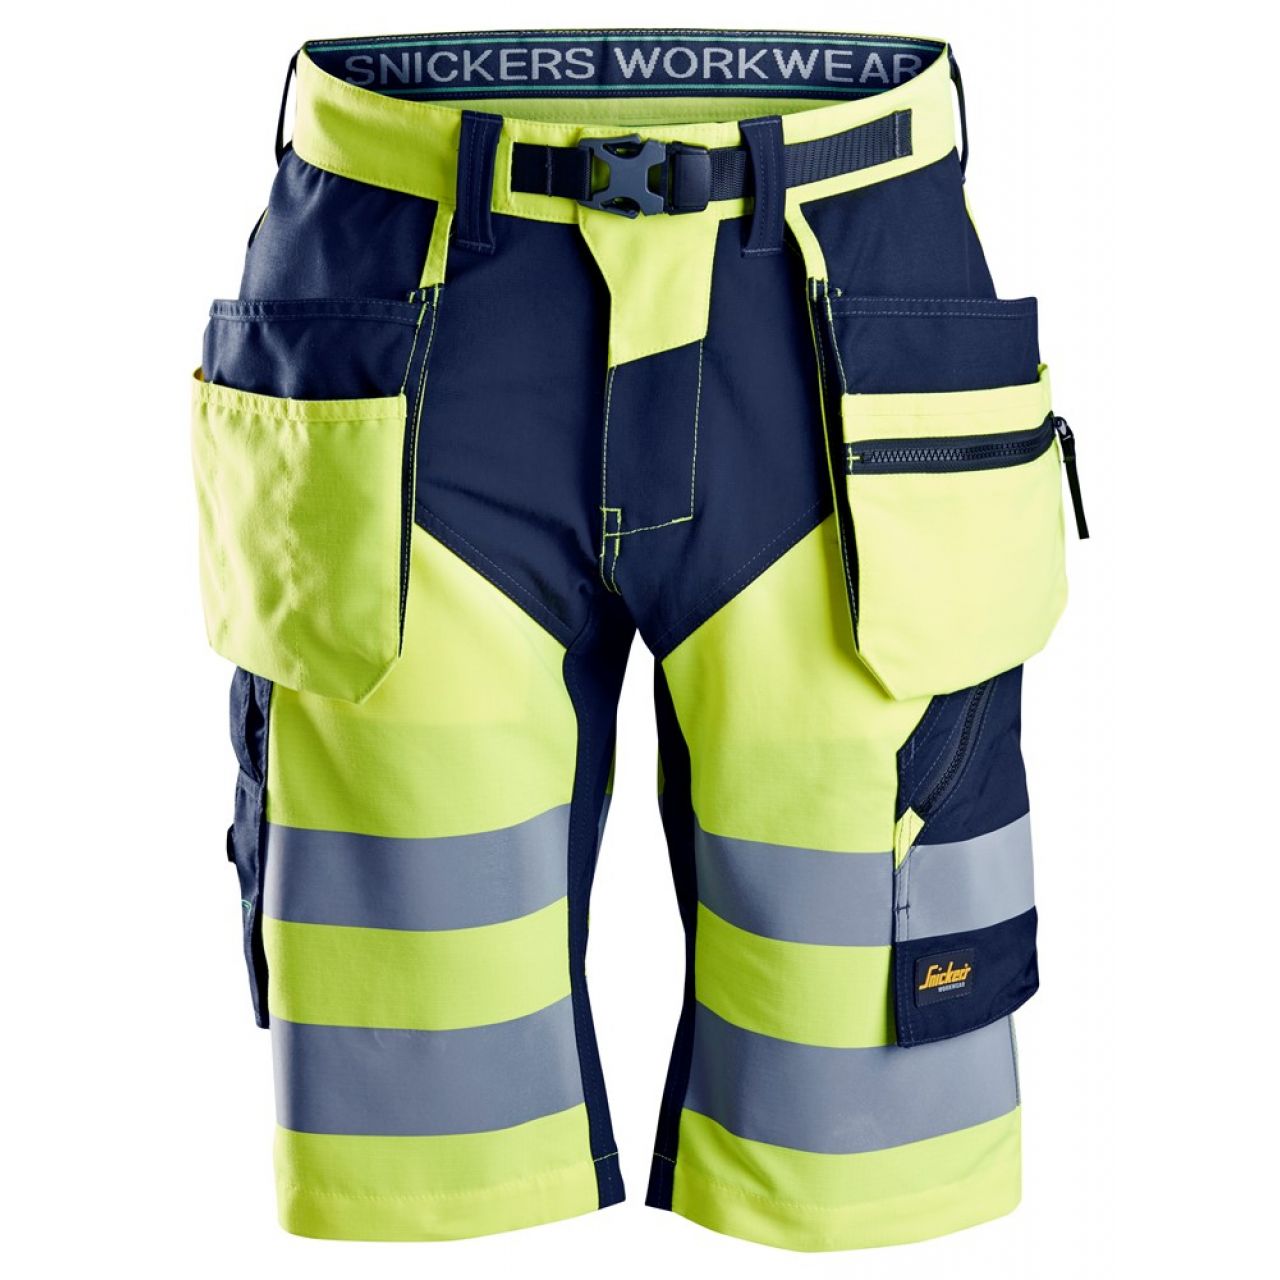 6933 Pantalones largos de trabajo de alta visibilidad clase 1 FlexiWork amarillo-azul marino talla 58